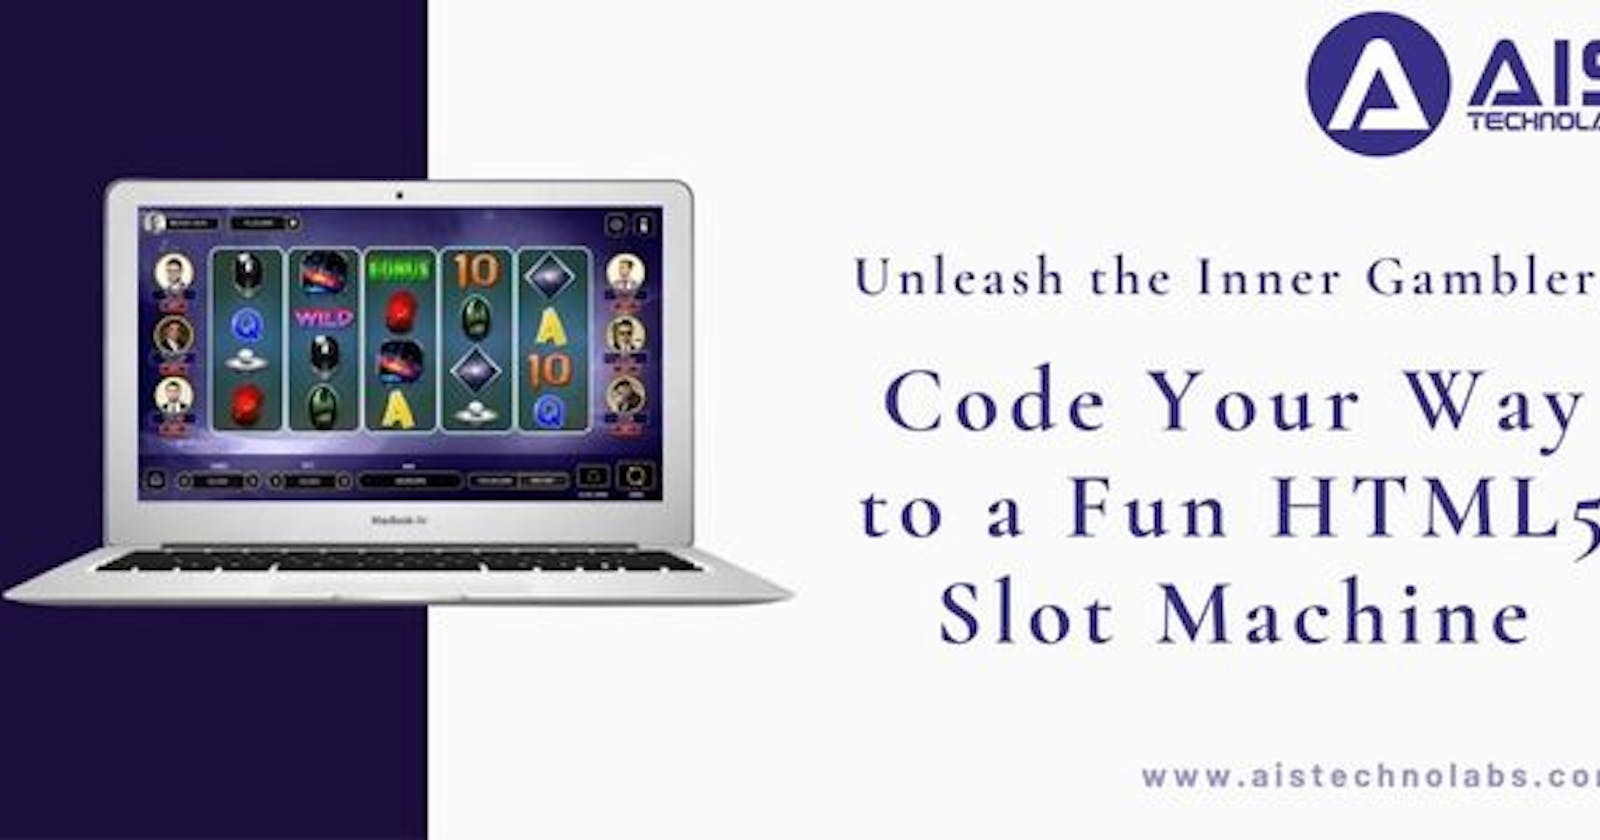 Unleash the Inner Gambler: Code Your Way to a Fun HTML5 Slot Machine